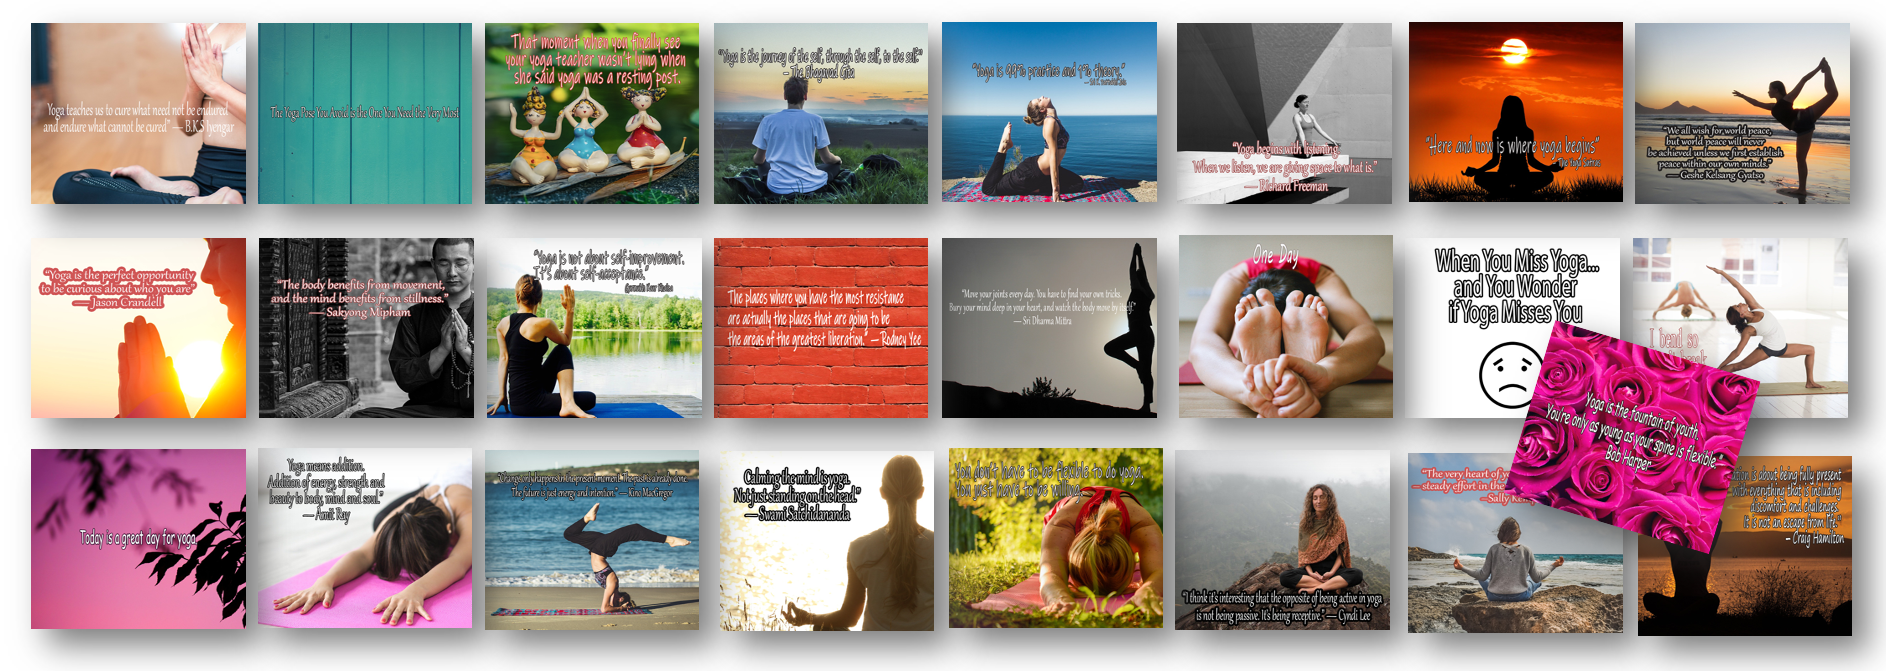 25 More Facebook Yoga Quotes